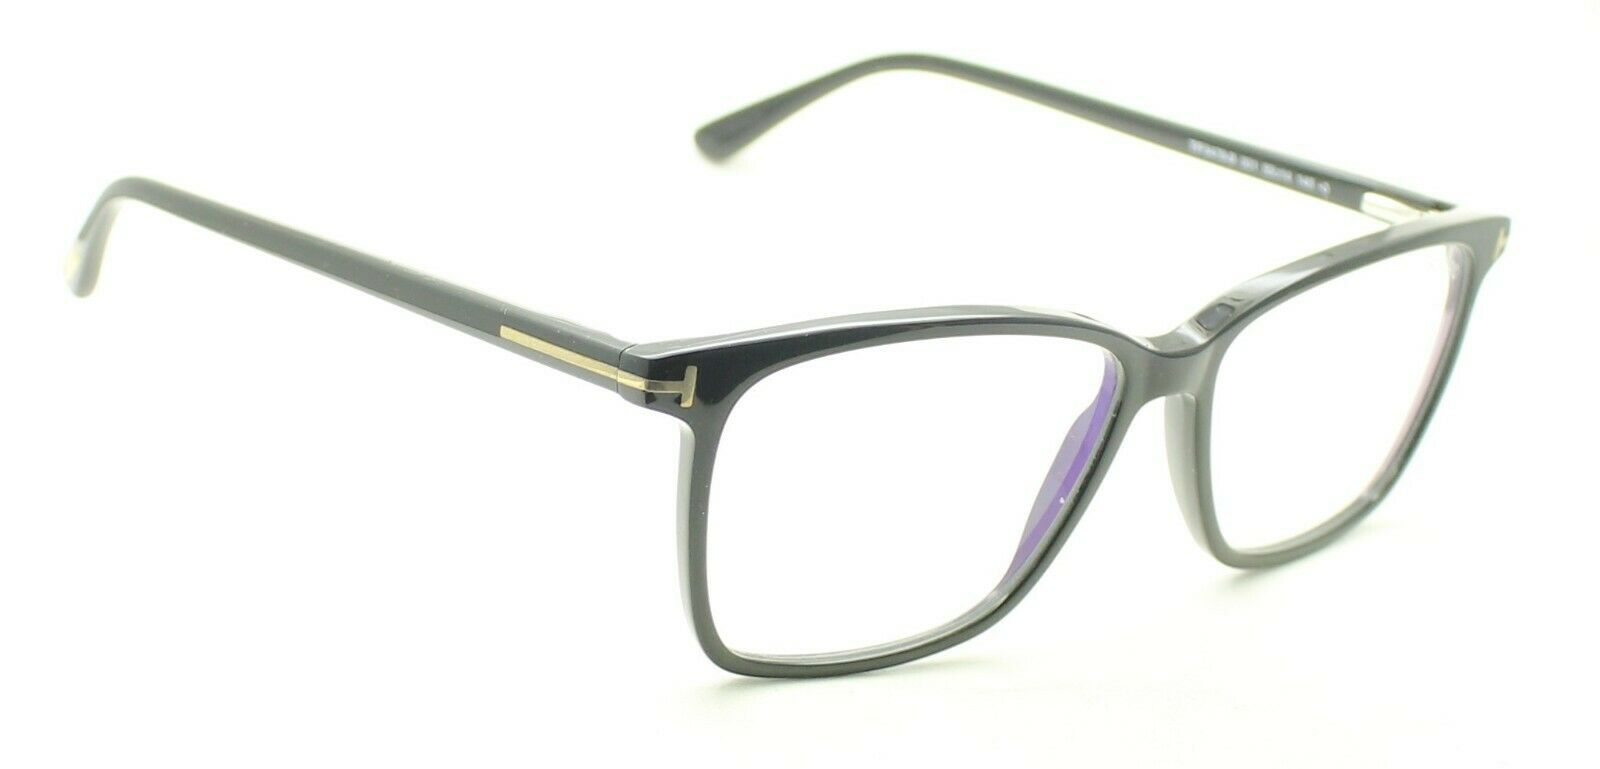 TOM FORD TF 5478-B 001 Eyewear FRAMES RX Optical Eyeglasses Glasses New - Italy